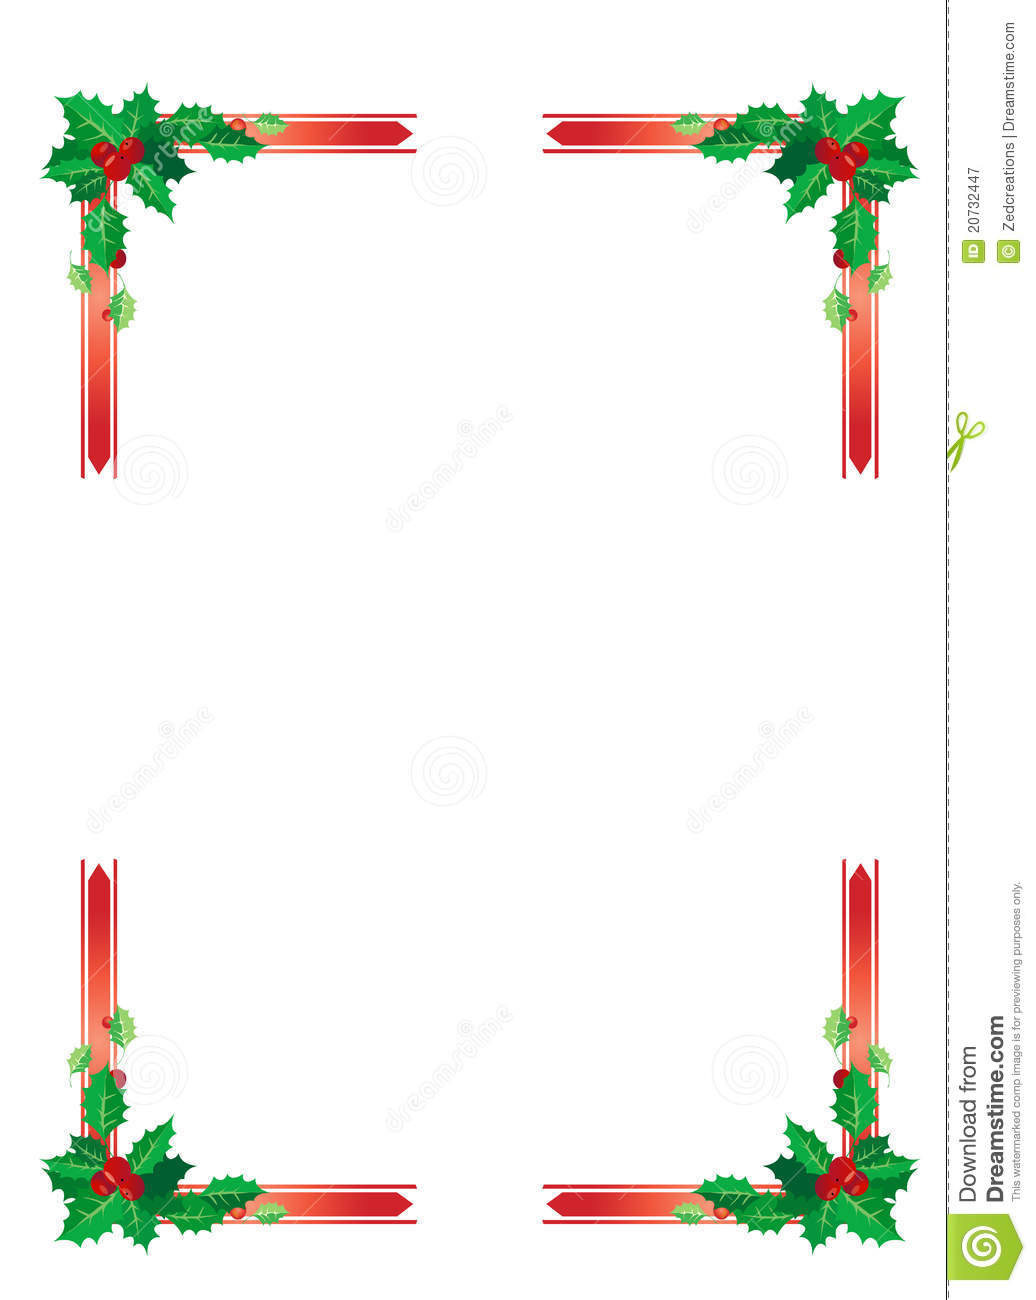 Free Christmas Border Designs for Word